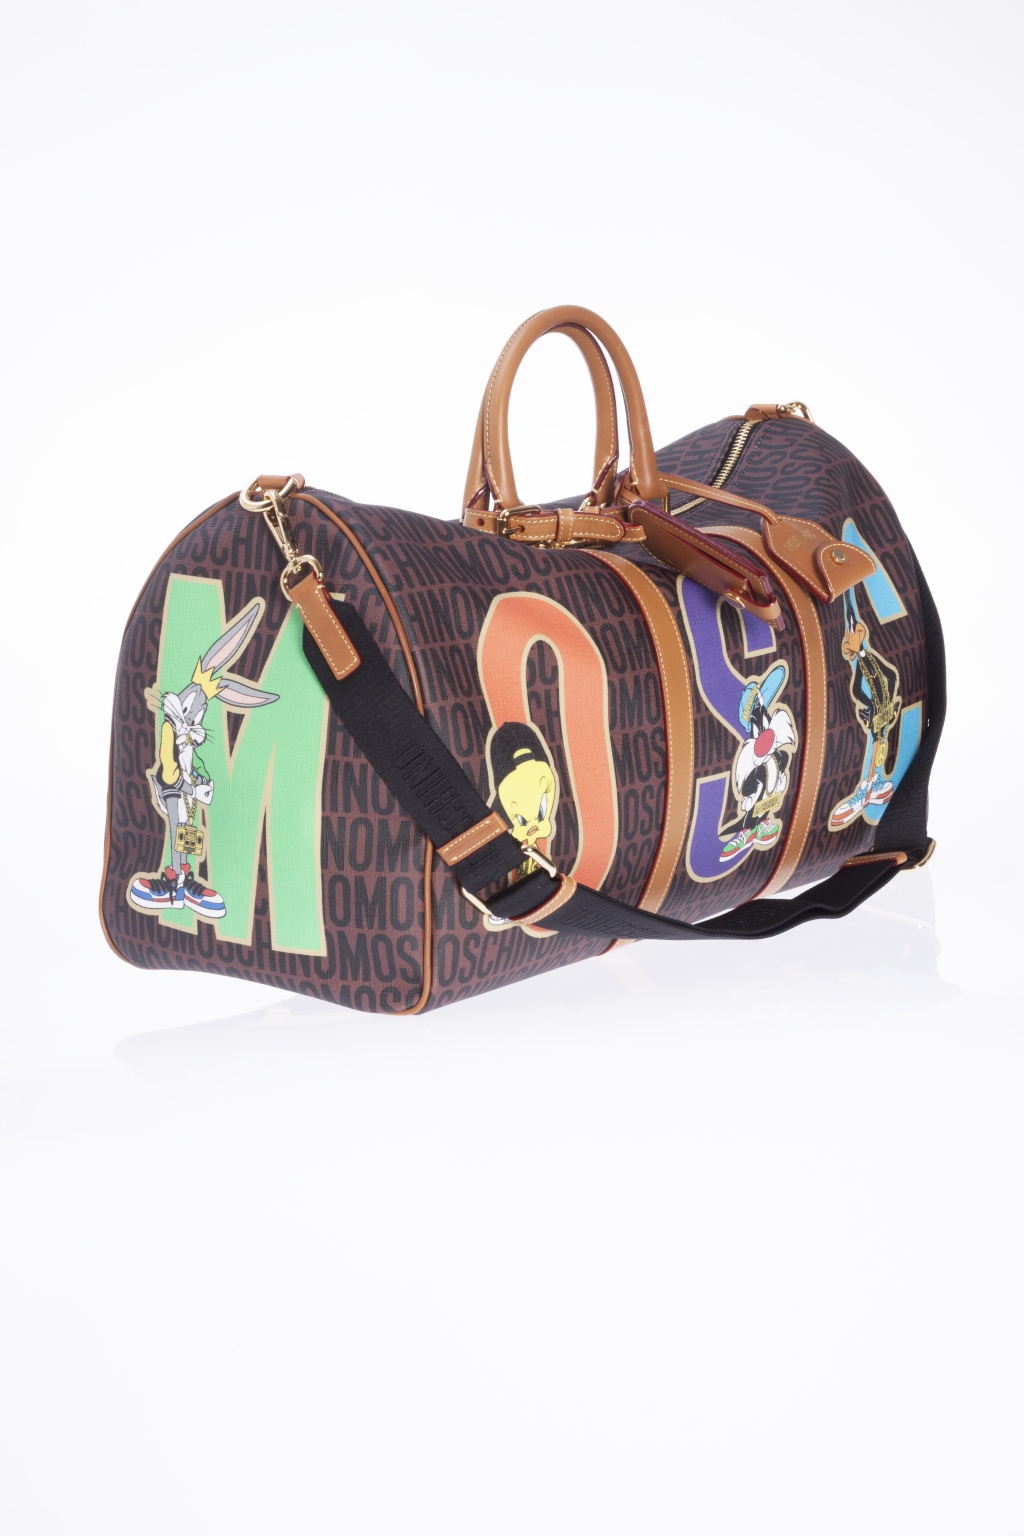 Moschino Handbag ss15 Looney Tunes coleccion fashion / bolso